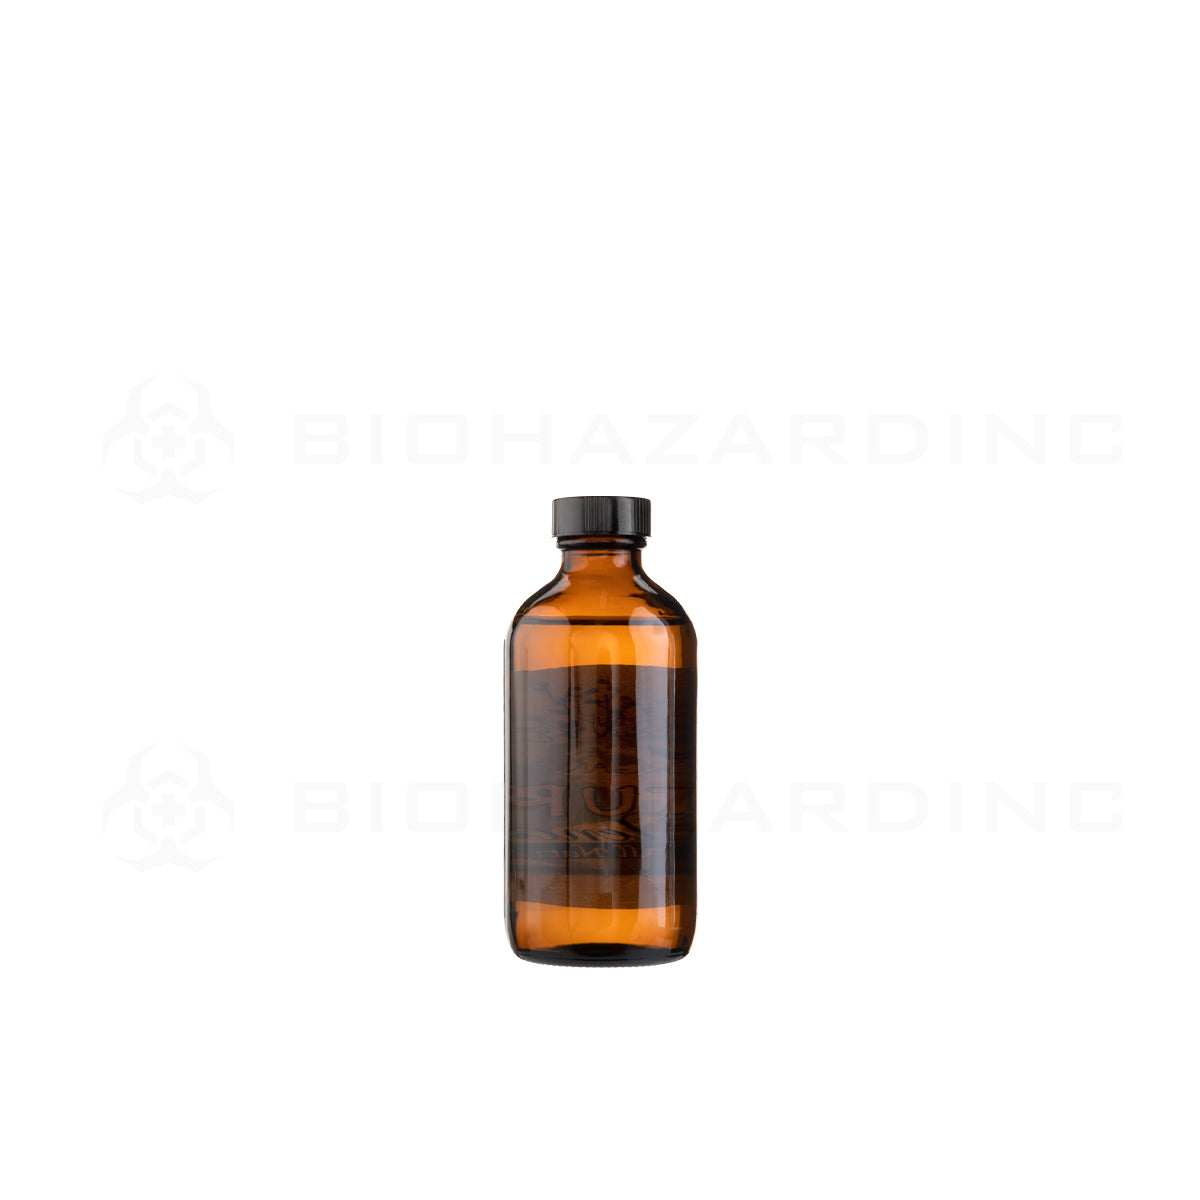 Natures Blend Vape Mix | 8oz Bottle  Biohazard Inc   